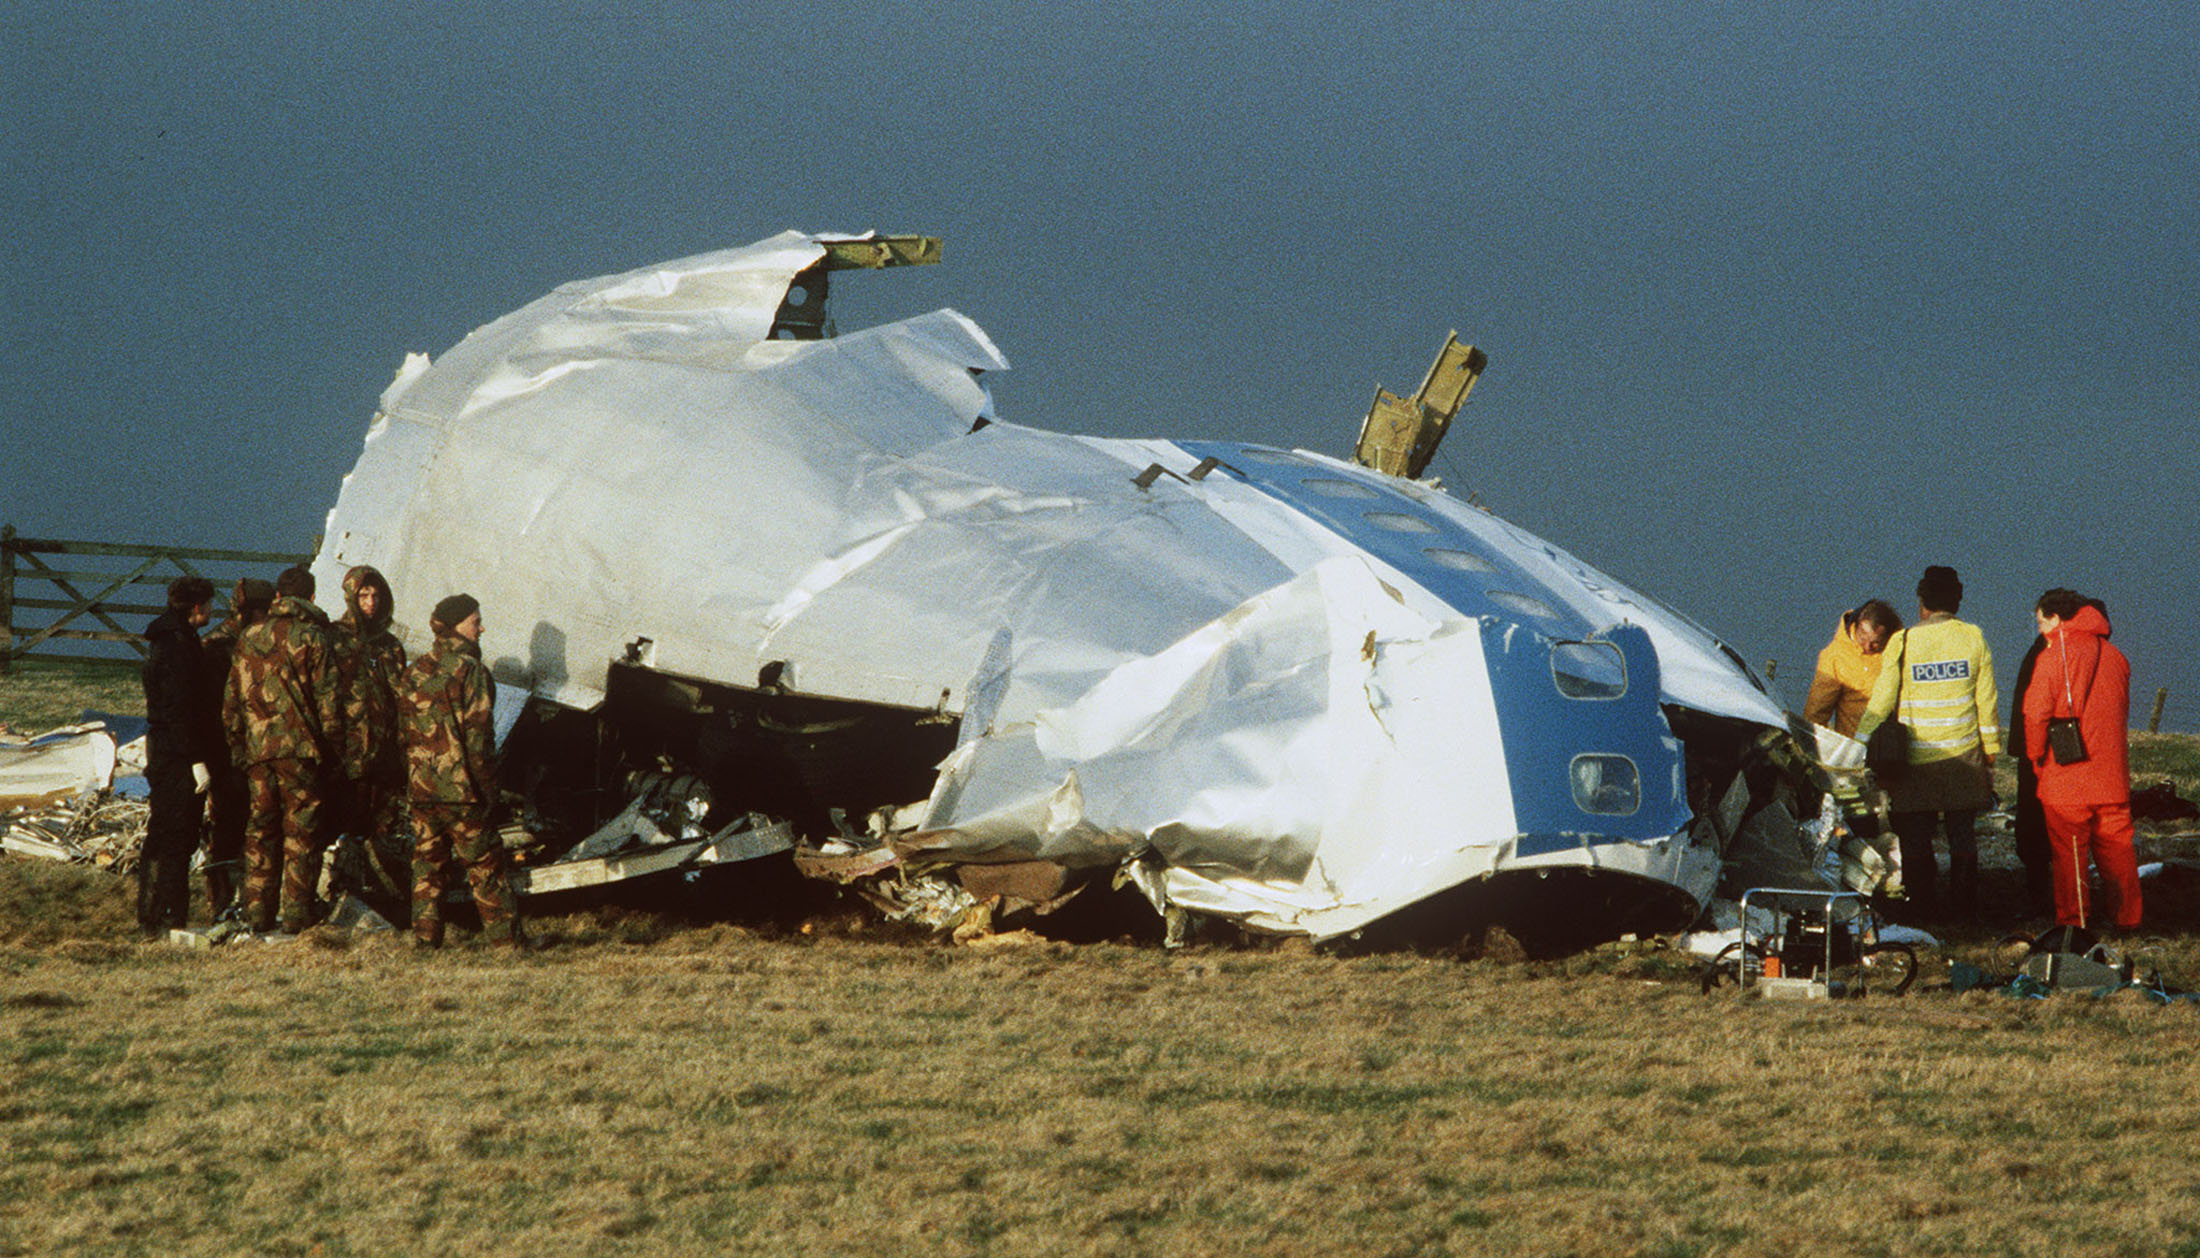 23 июня 1985. Взрыв Boeing 747 над Локерби. Авиакатастрофы Боинг 747 над Локерби. Катастрофа Боинг 747 над Локерби.